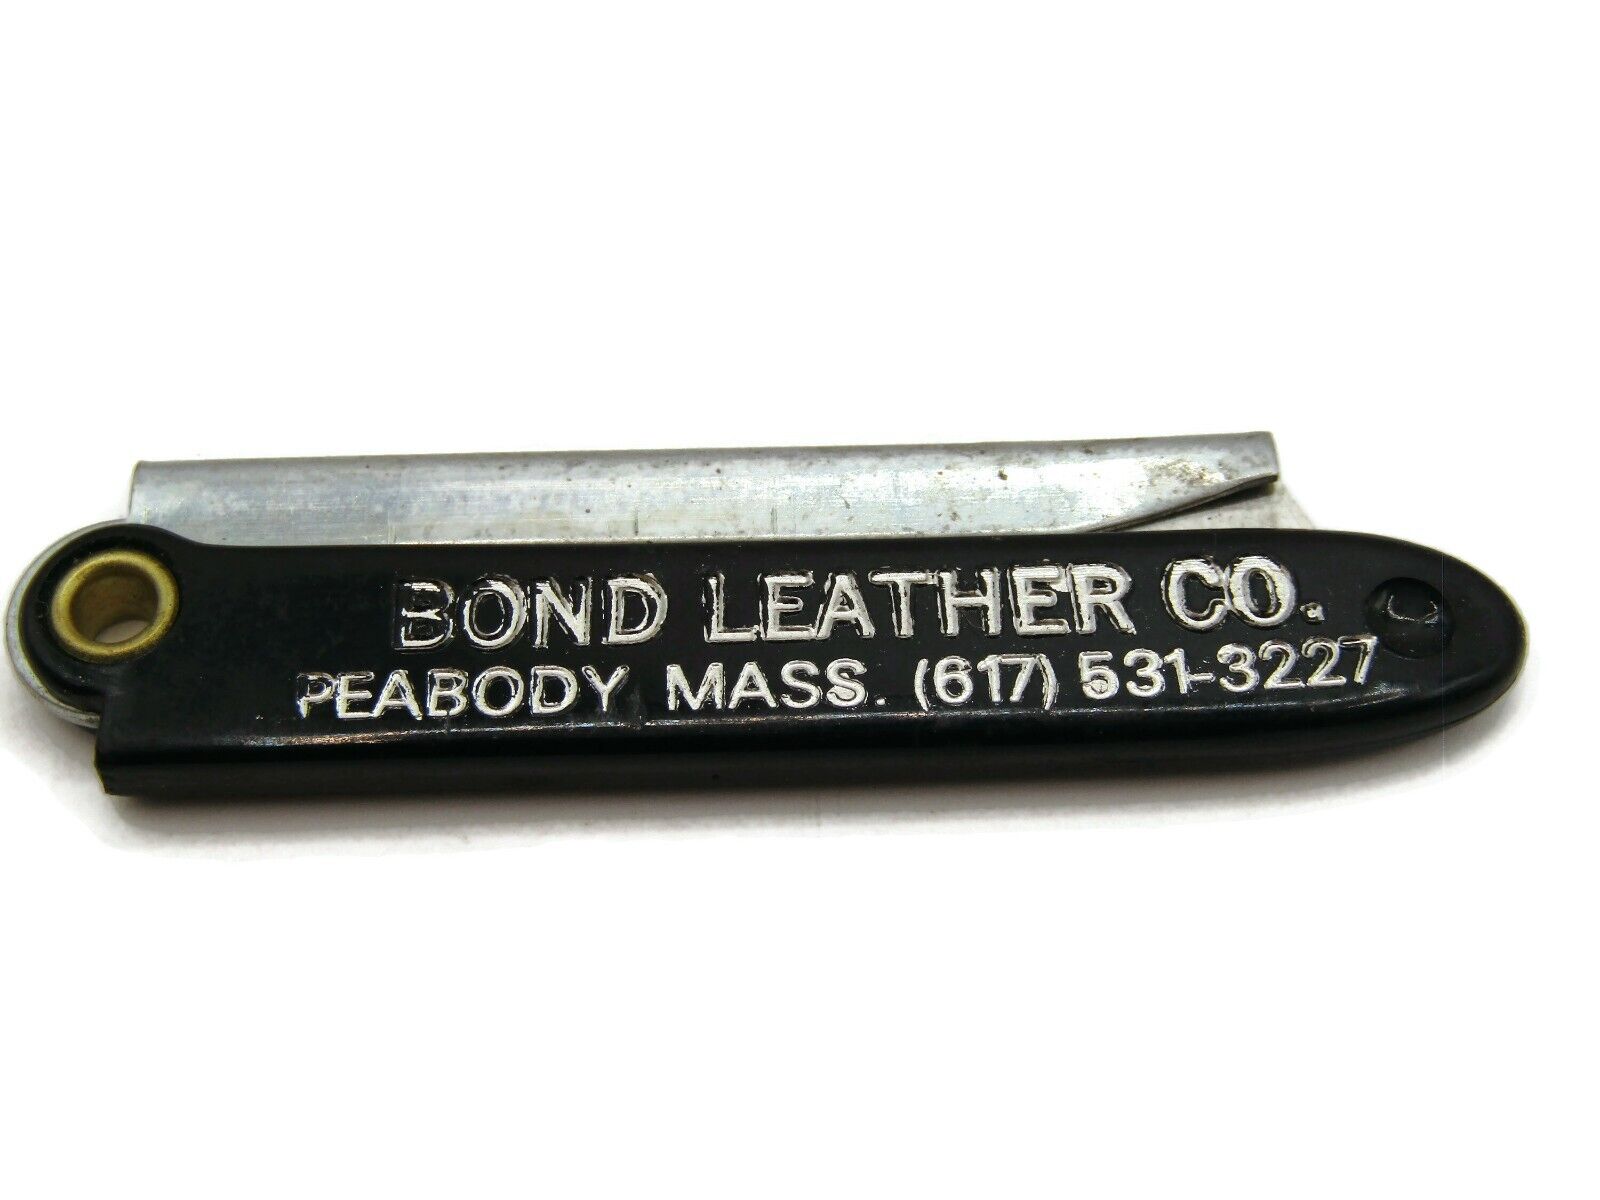 Bond Leather Co Pocket Razer Vintage Advertising Peabody Mass